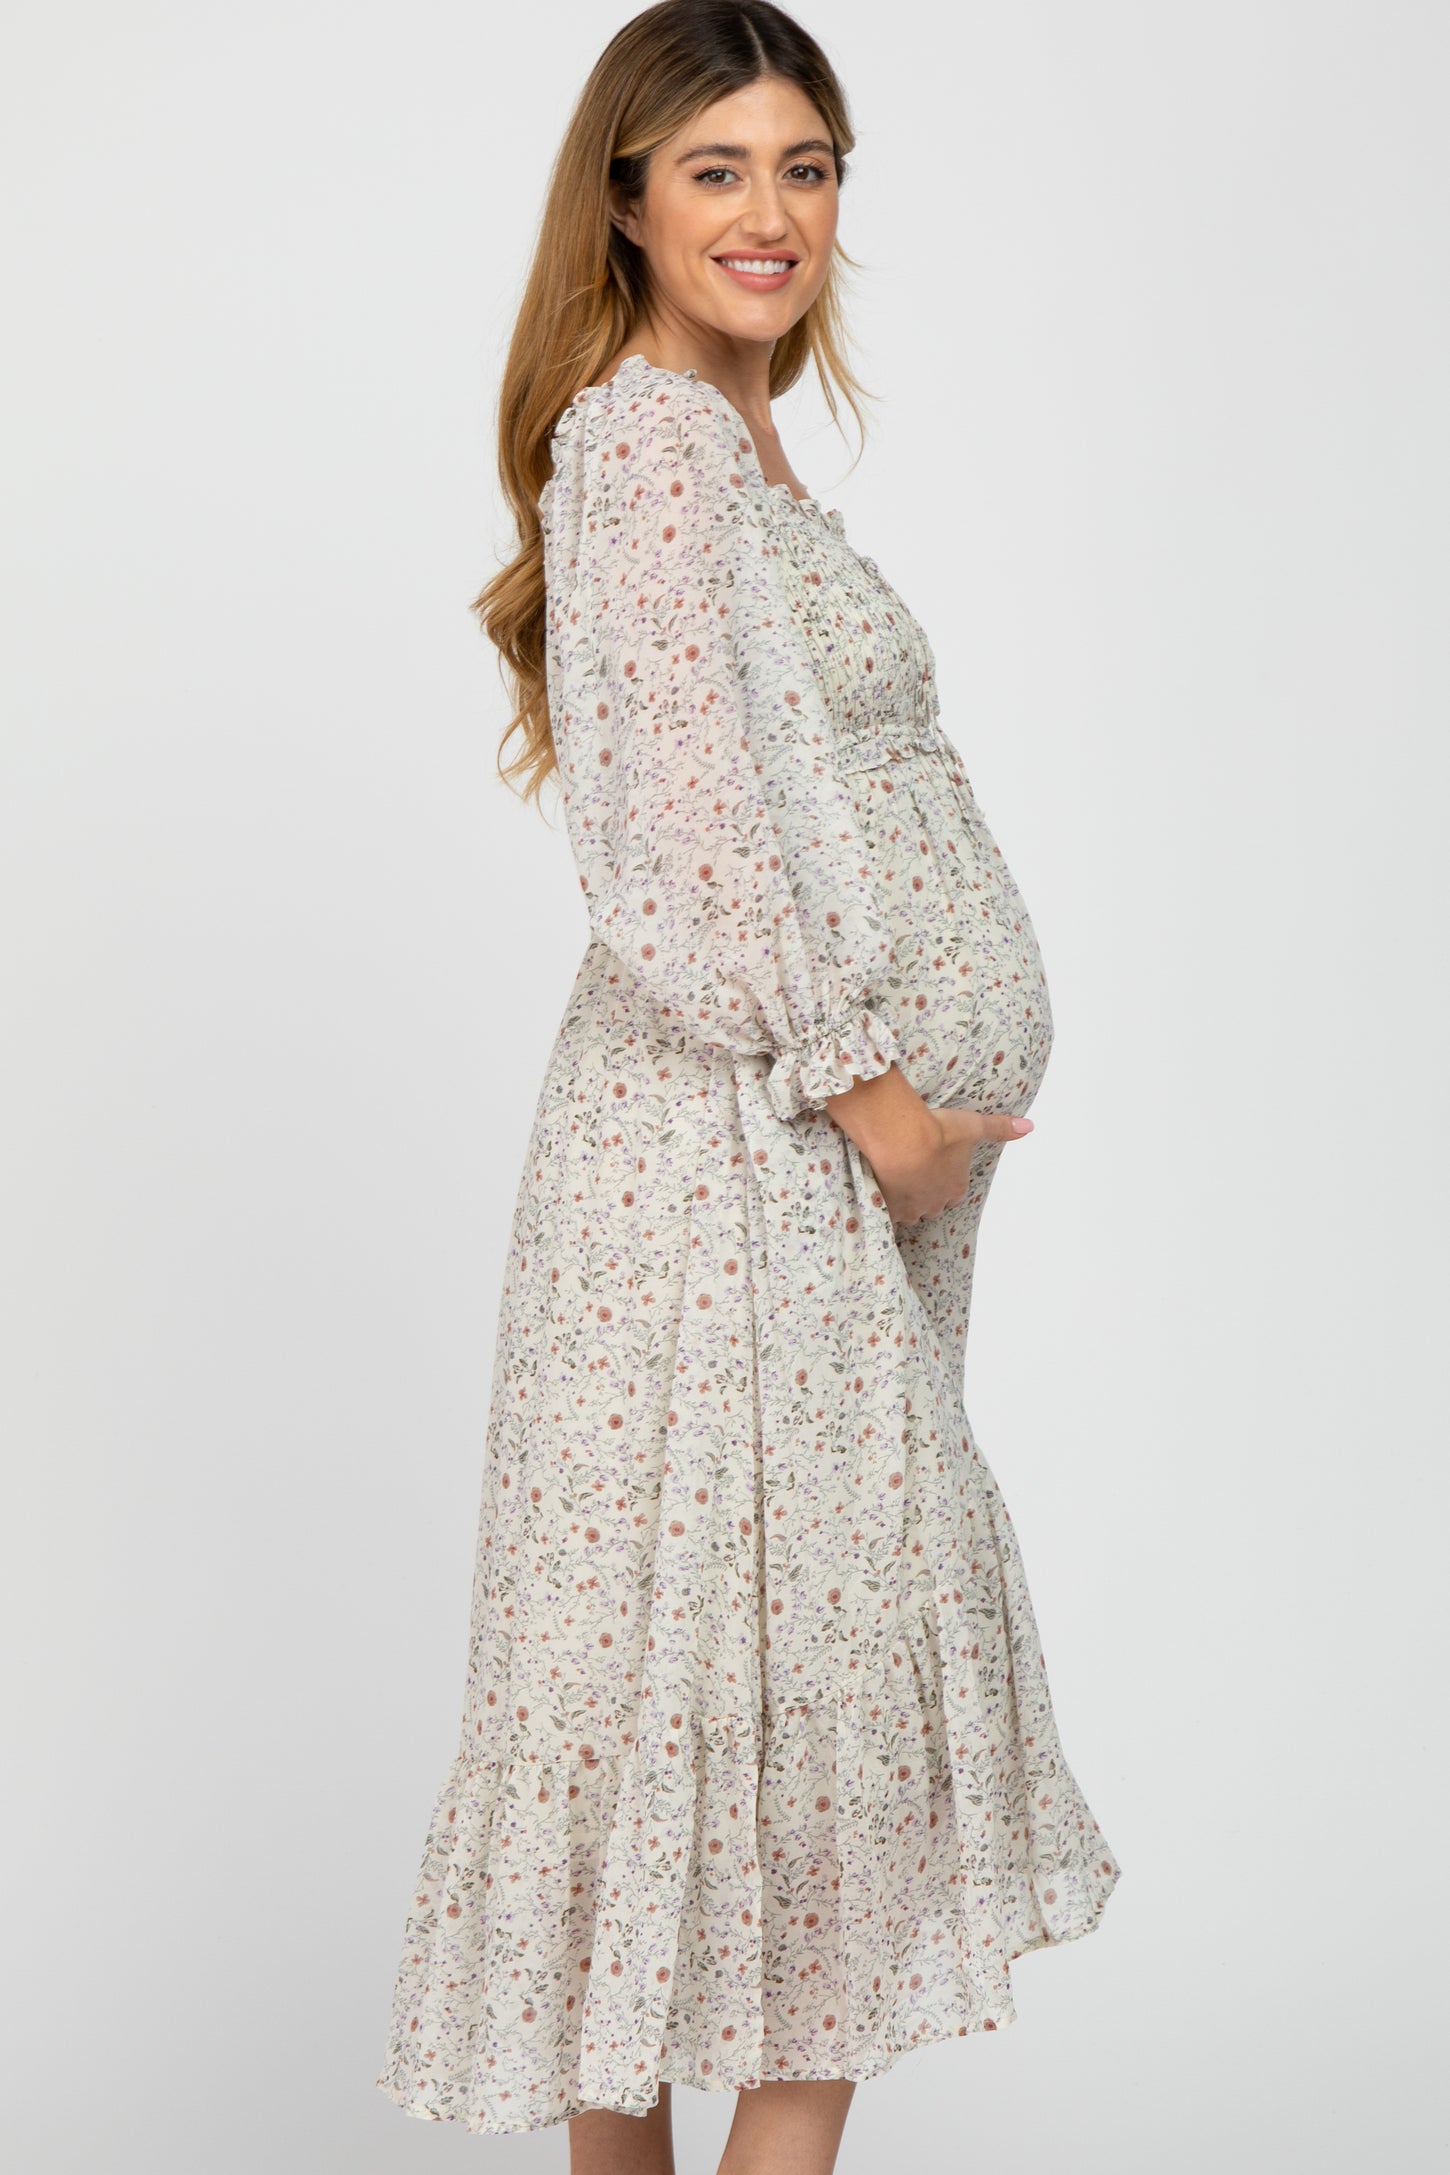 Ivory Floral Smocked 3/4 Sleeve Maternity Dress